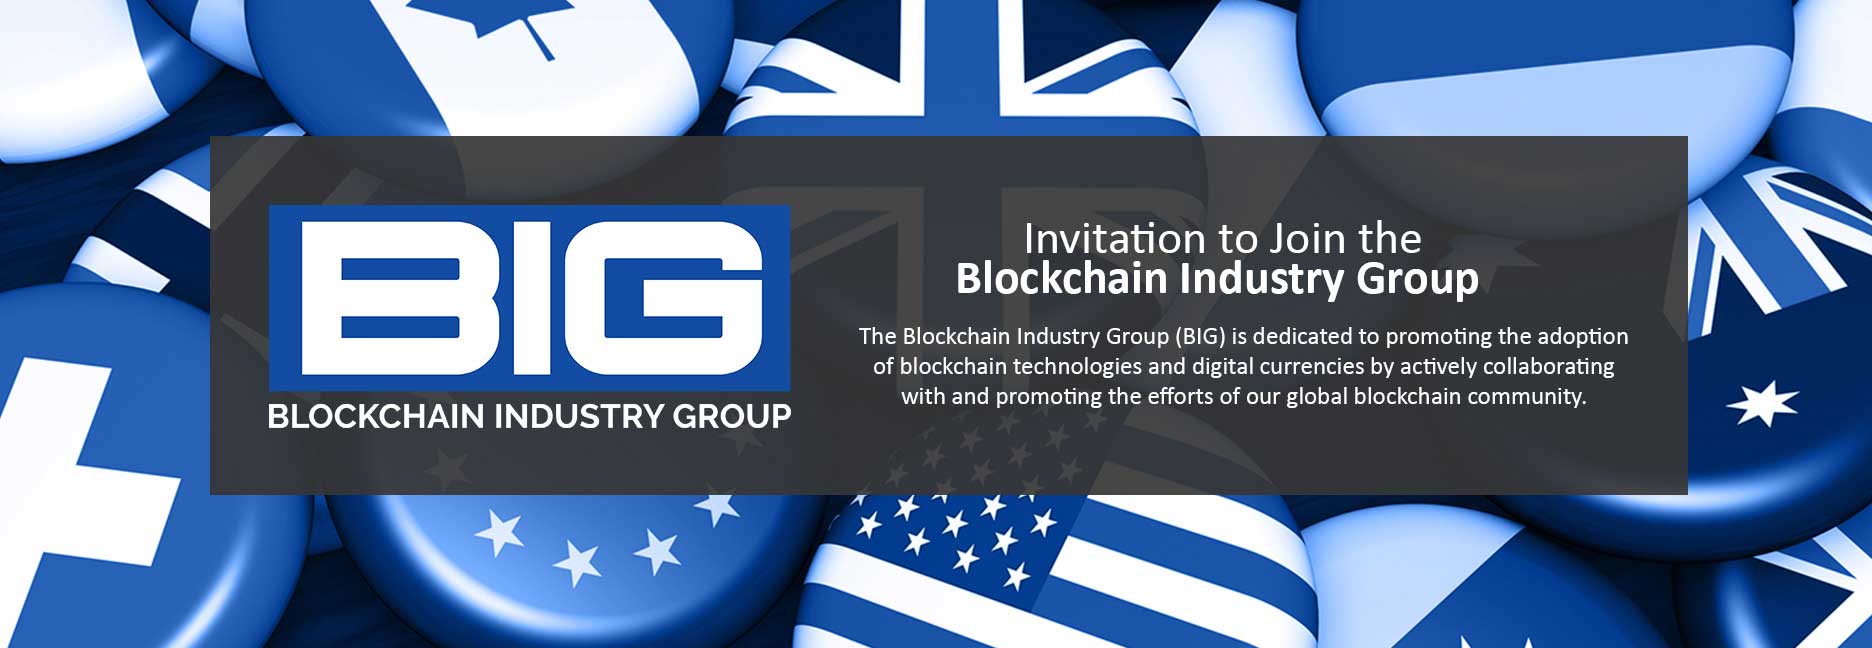 Blockchain Industry Group